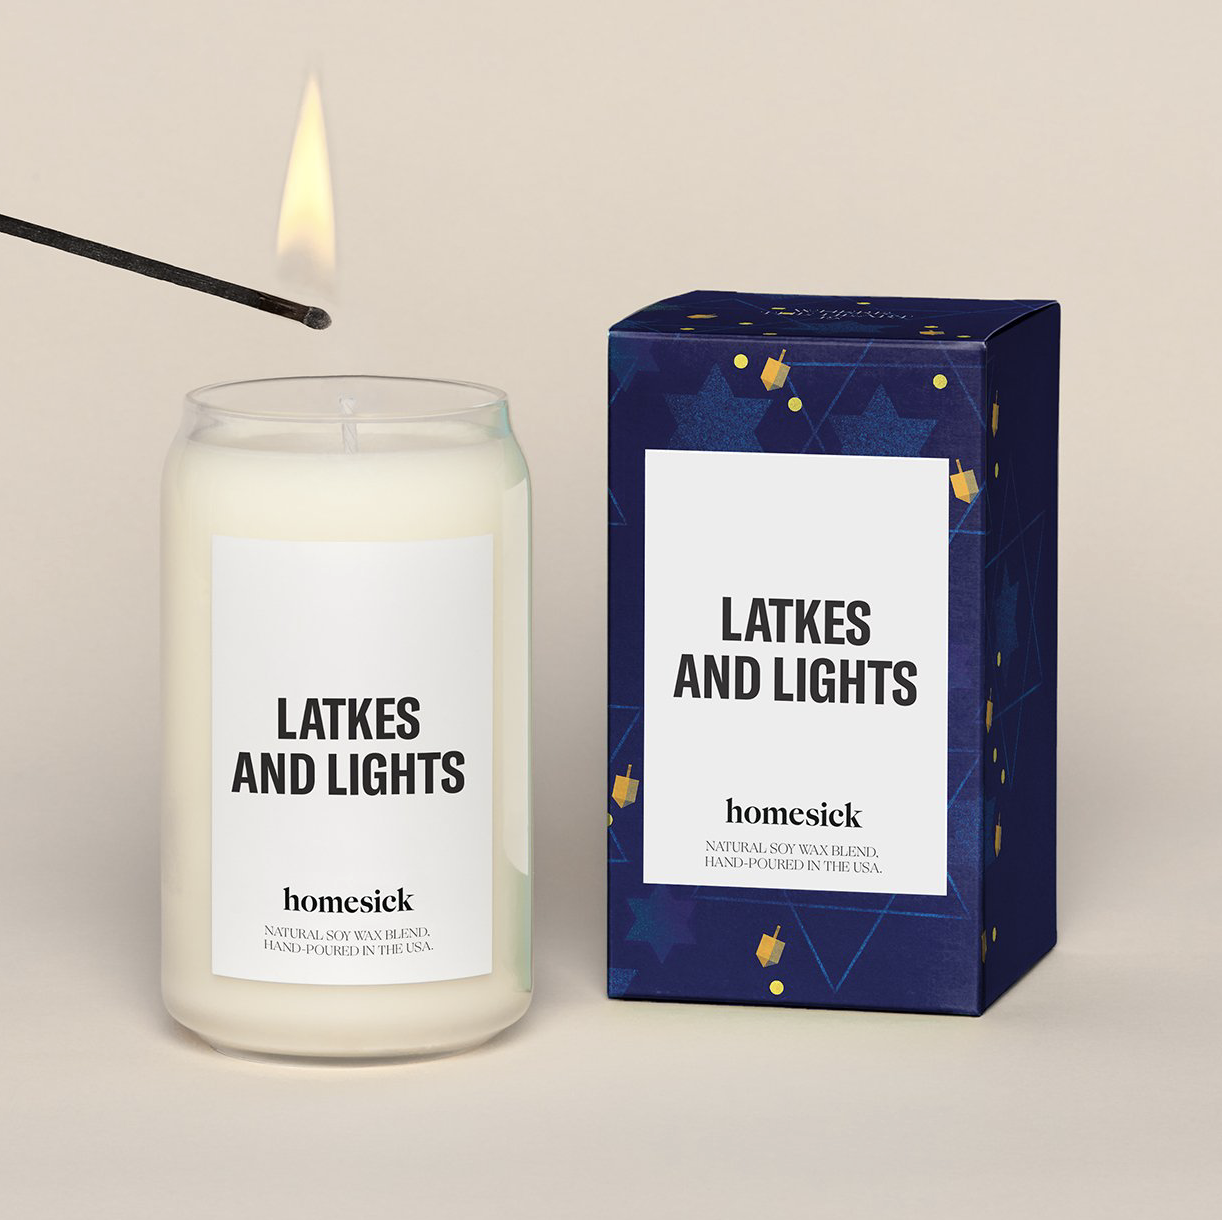 Homesick Latkes and Lights Candle